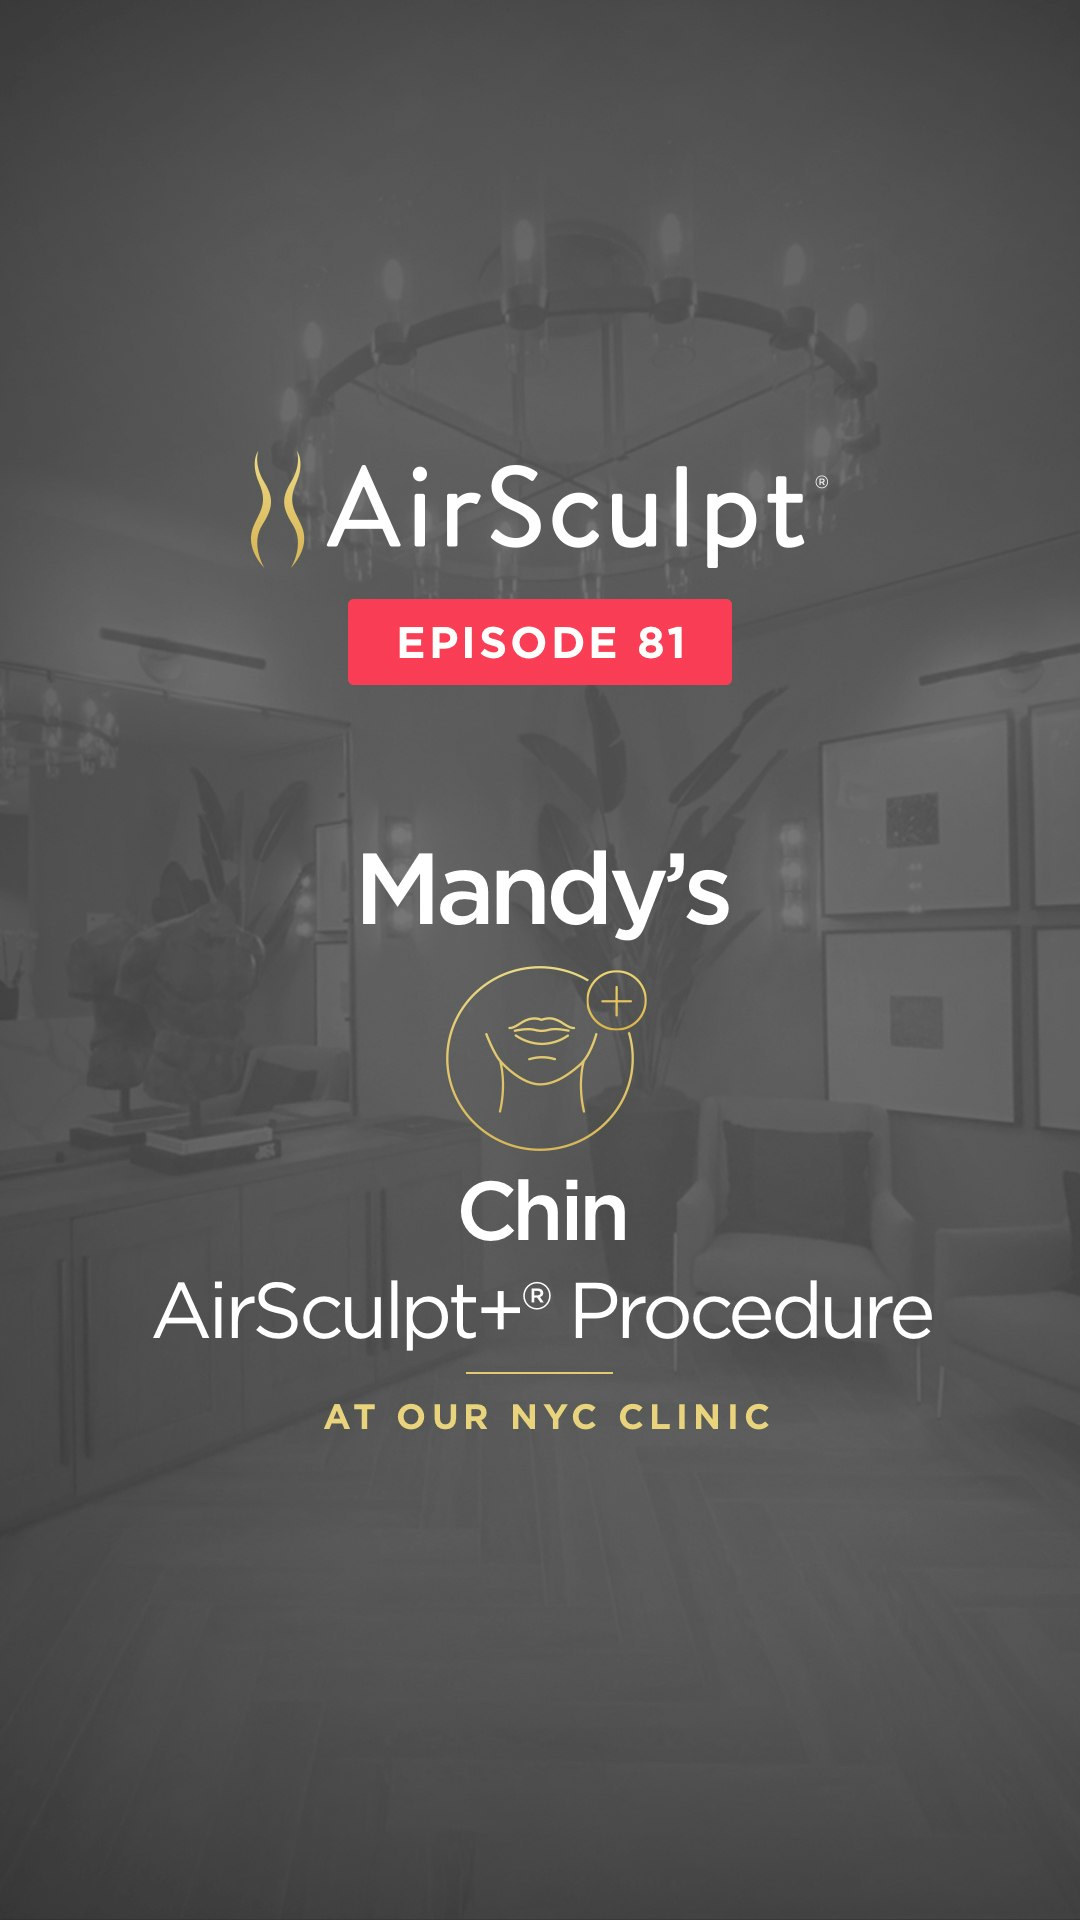 Mandy's airsculpt tv thumbnail